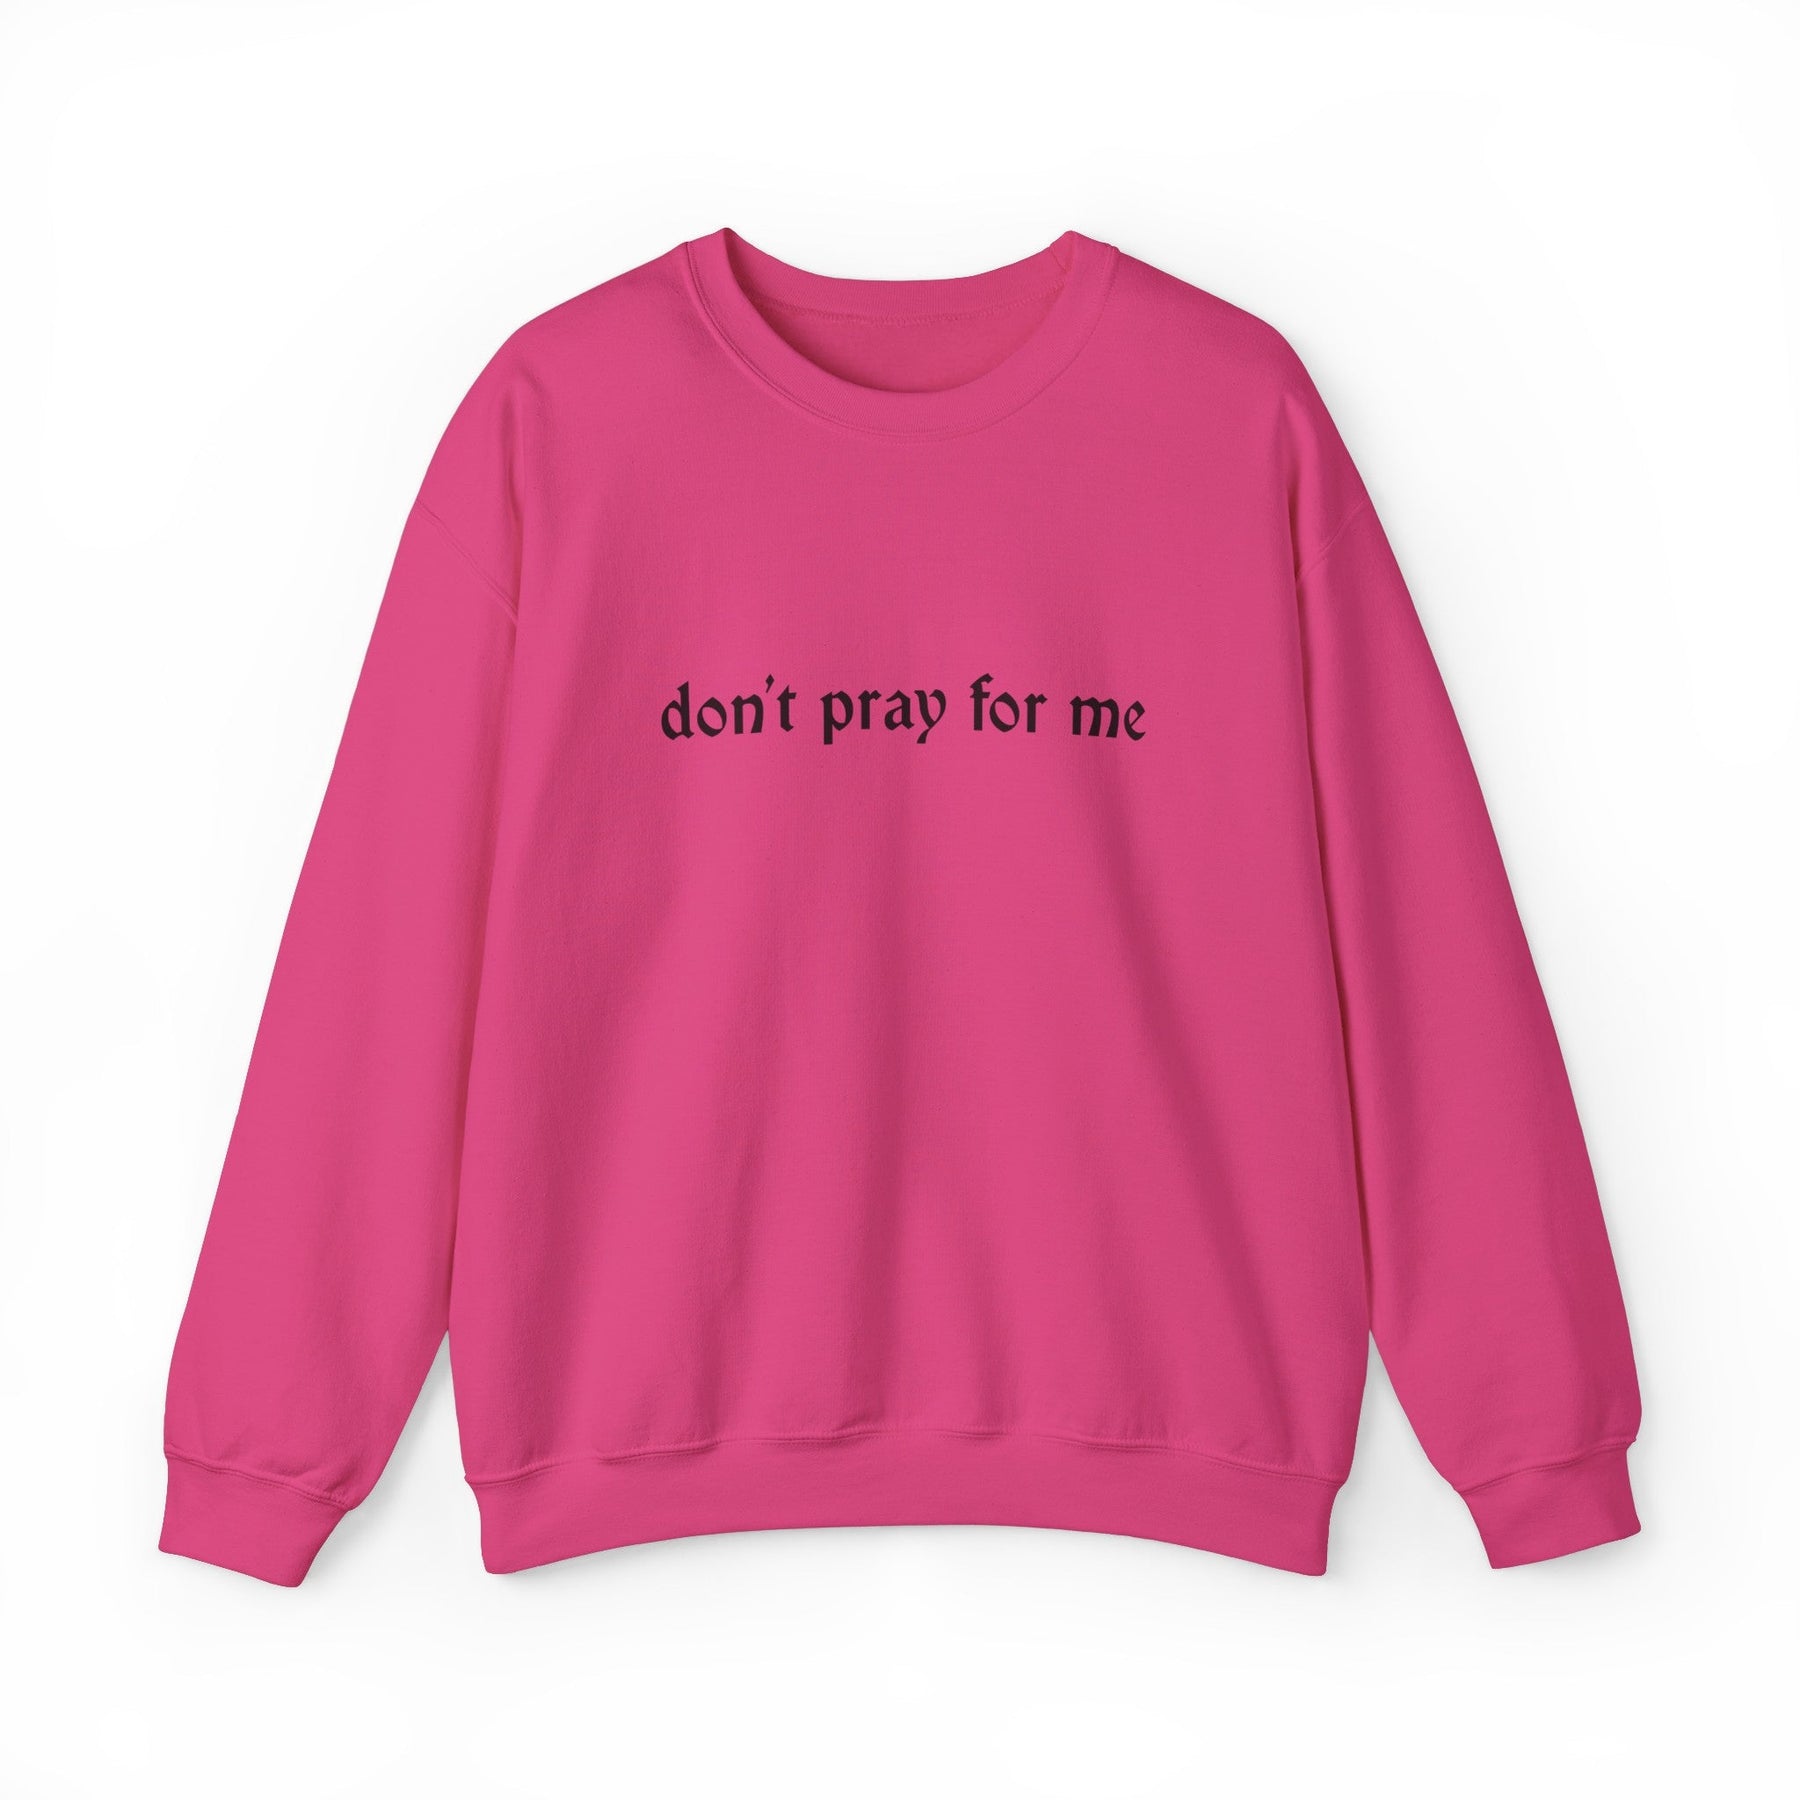 Don't Pray Crewneck Sweatshirt - Goth Cloth Co.Sweatshirt11977566284921706549